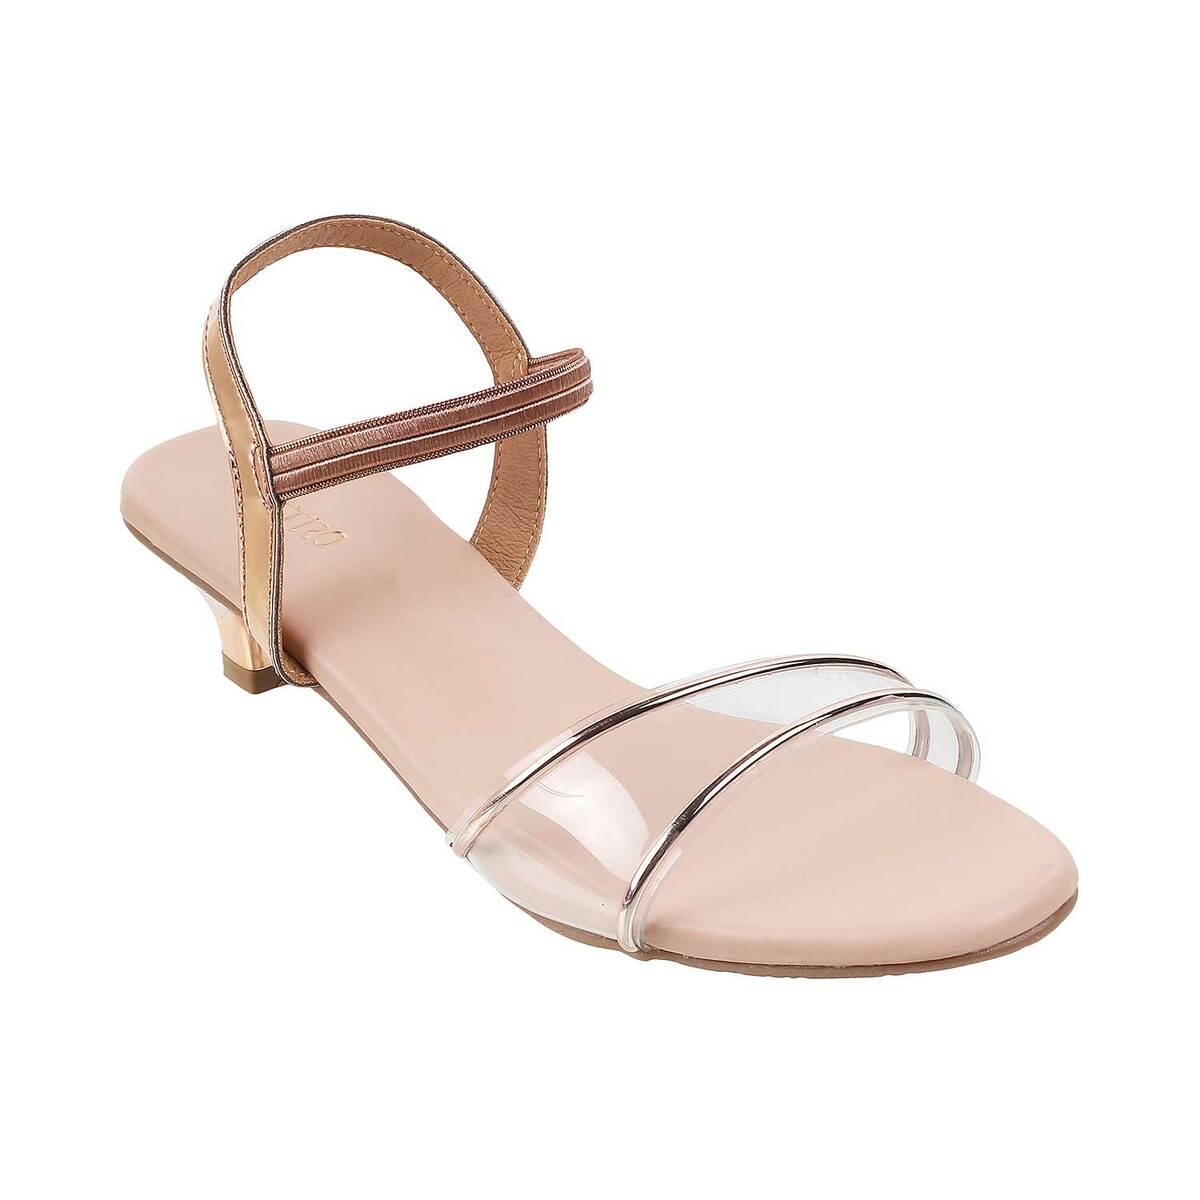 GIRLS Slippers / Summer women slippers sandals/ New Designs / Hand Made |  eBay